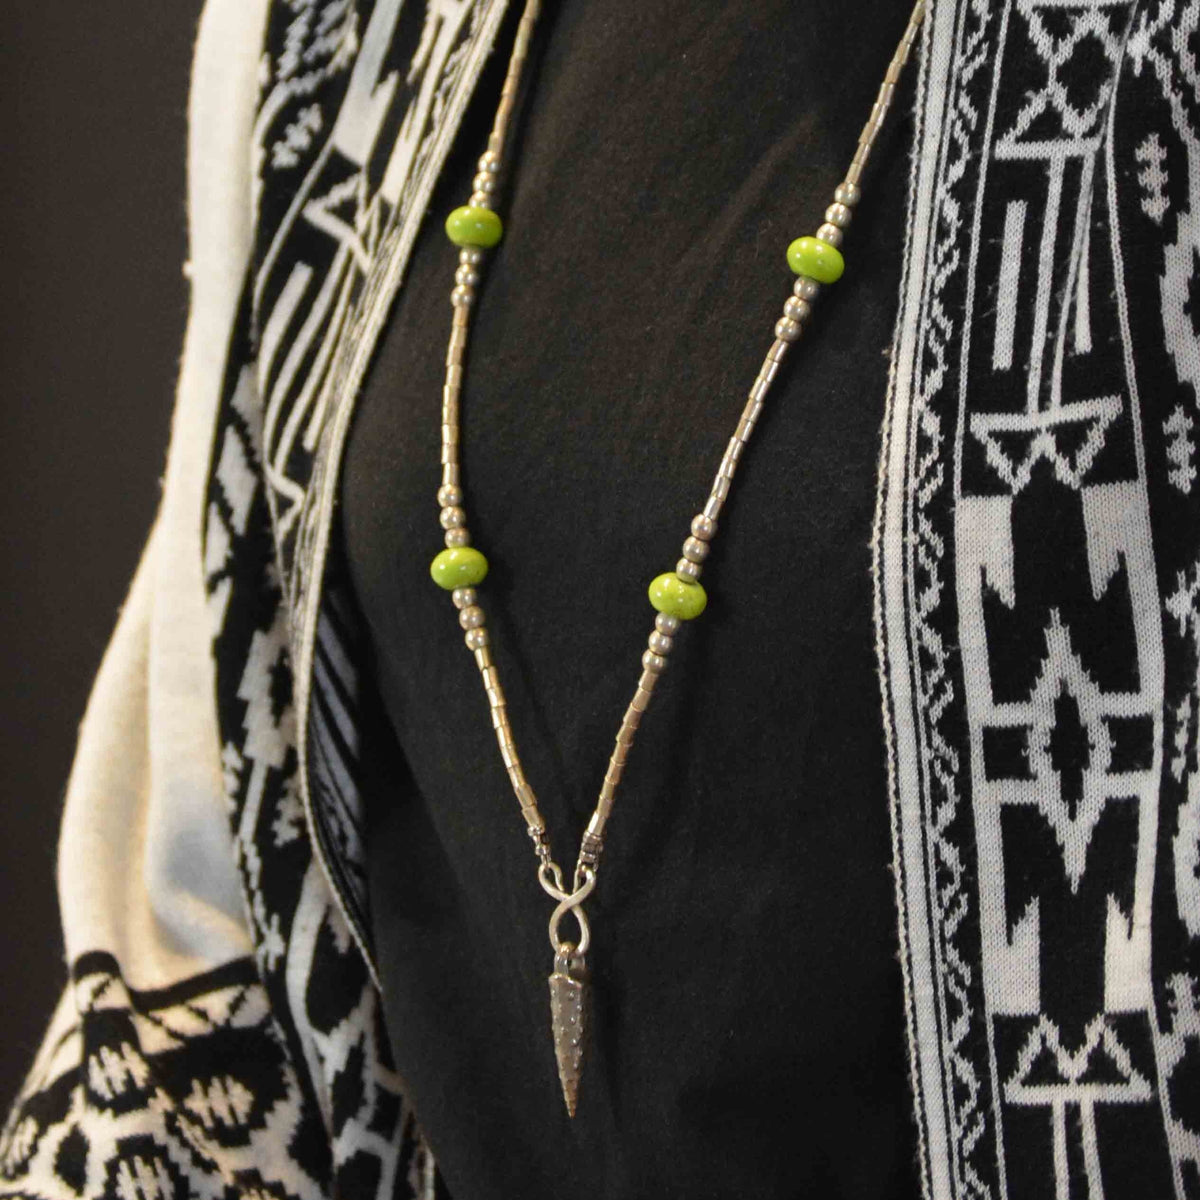 Pinole iron pendant with California green beads